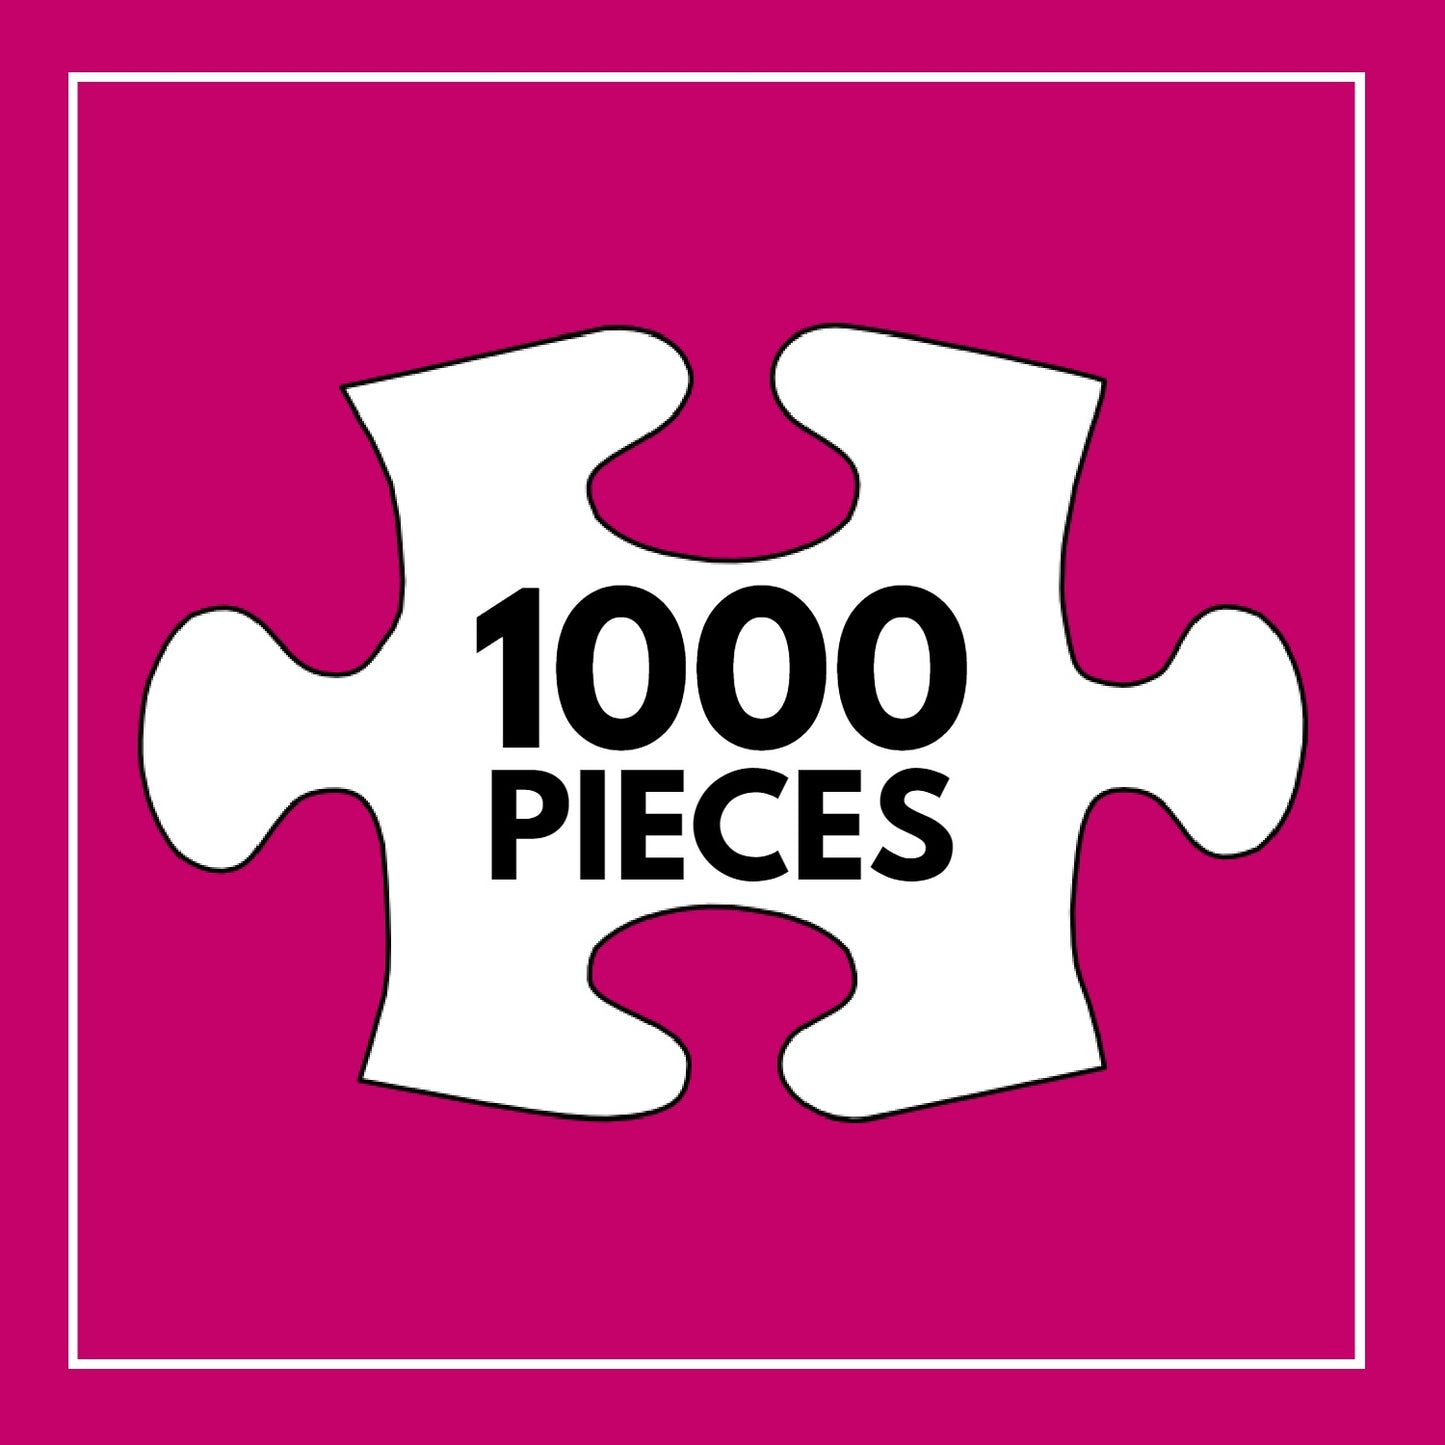 Waterlilies by Moonlight - 1000 Piece Jigsaw Puzzle | Cross & Glory